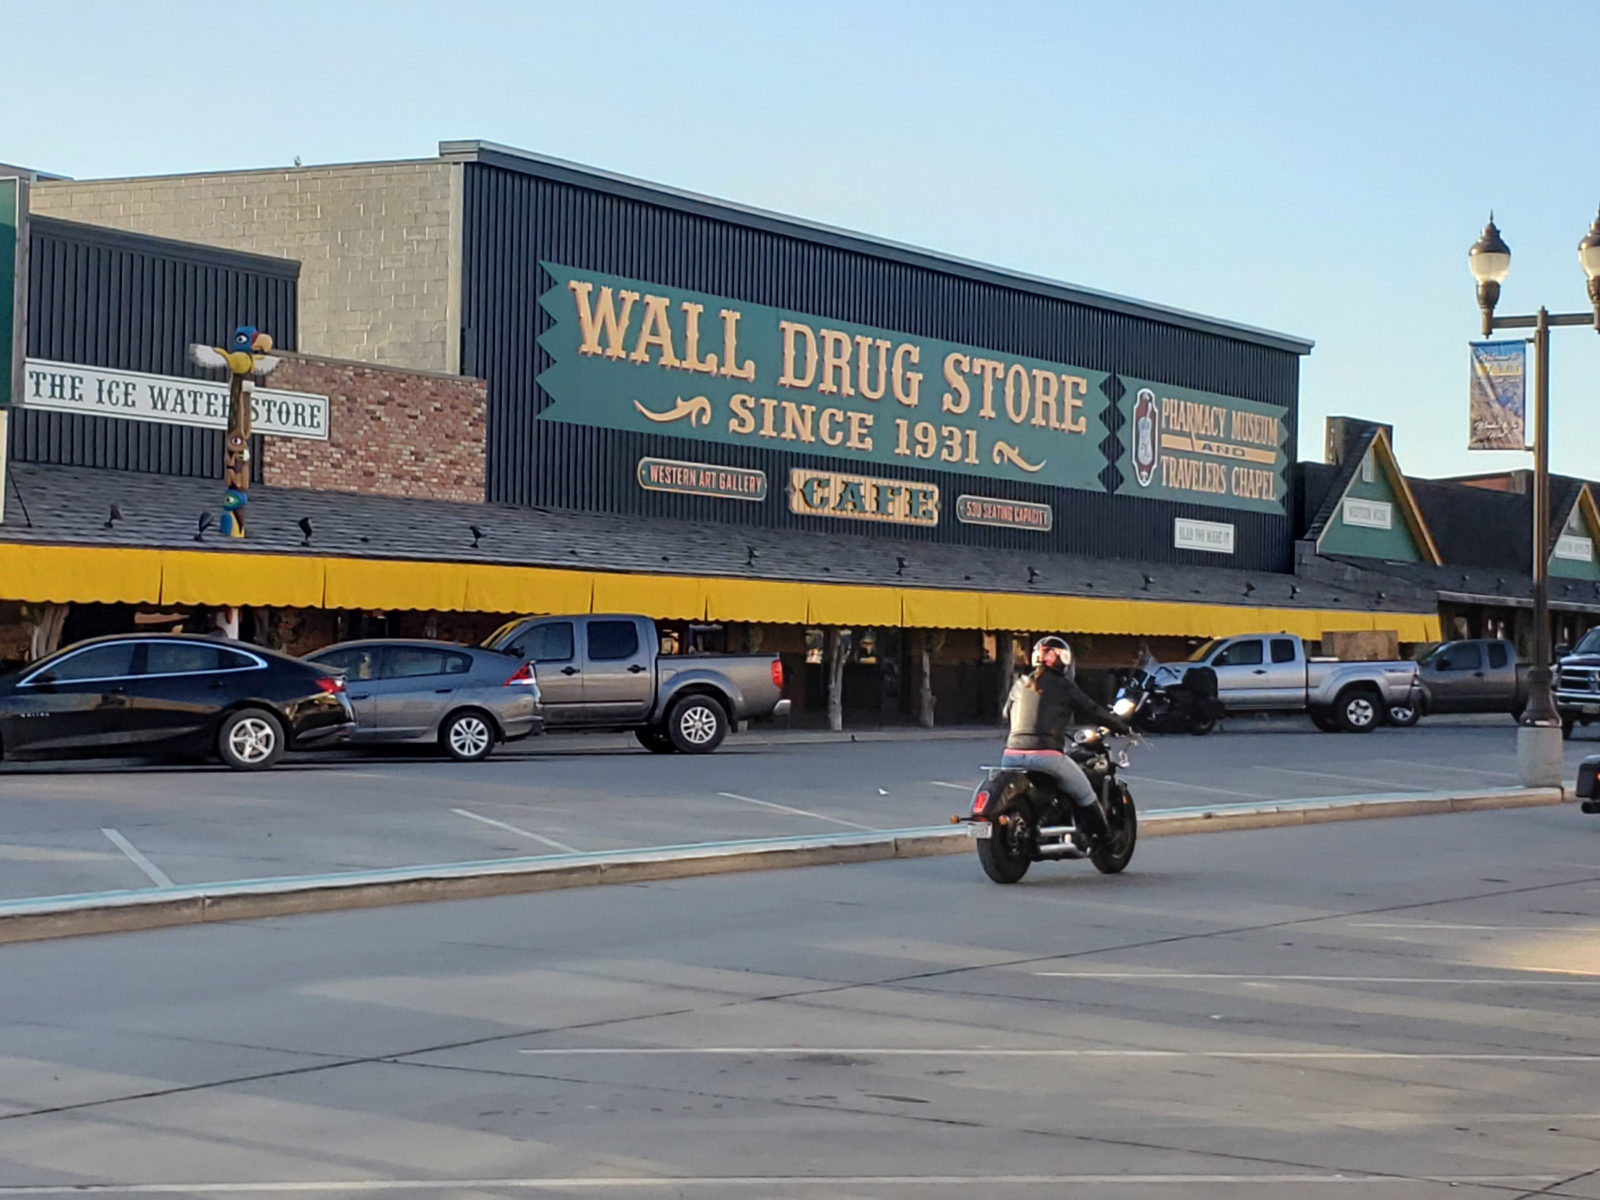 Wall Drugstore in Wall South Dakota